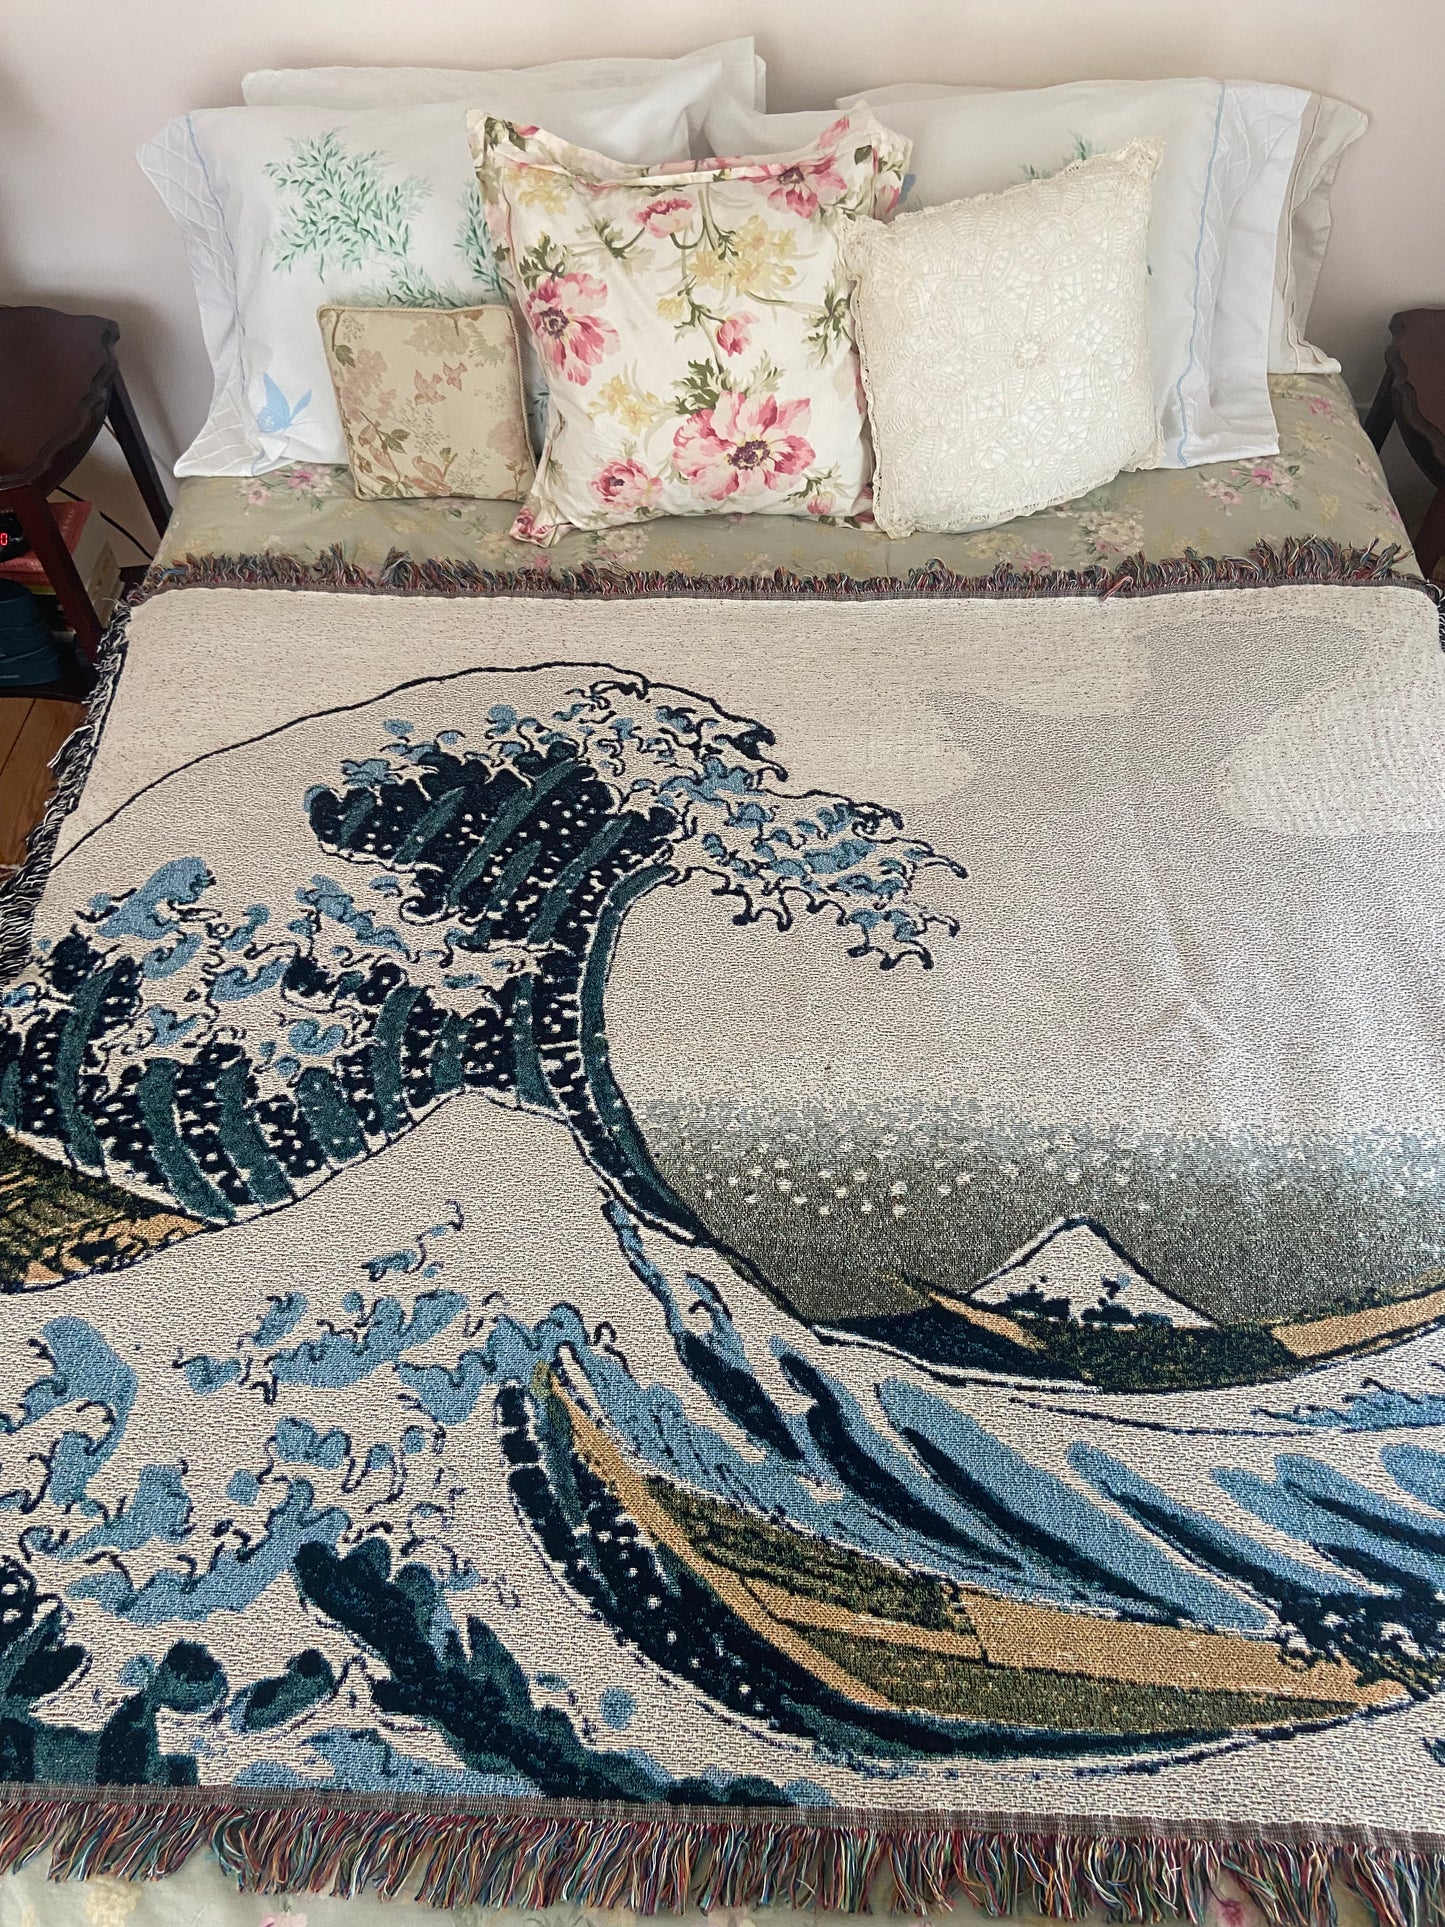 Jacquard Weave Throw Blanket of Great Wave off Kanagawa